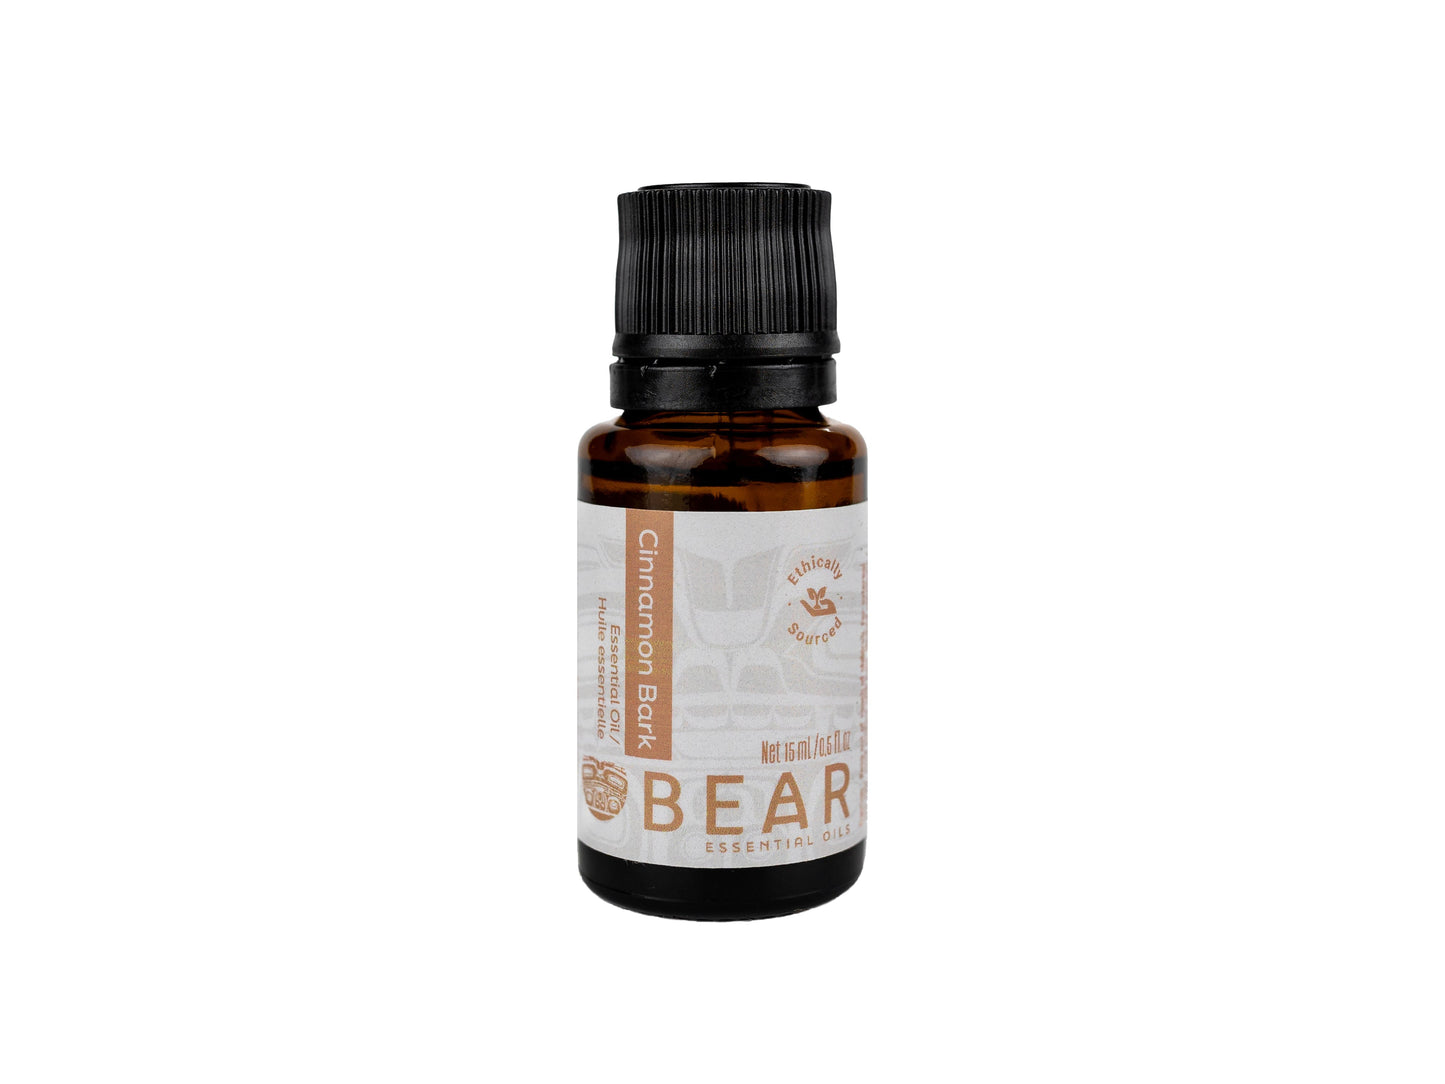 Bear essential oils